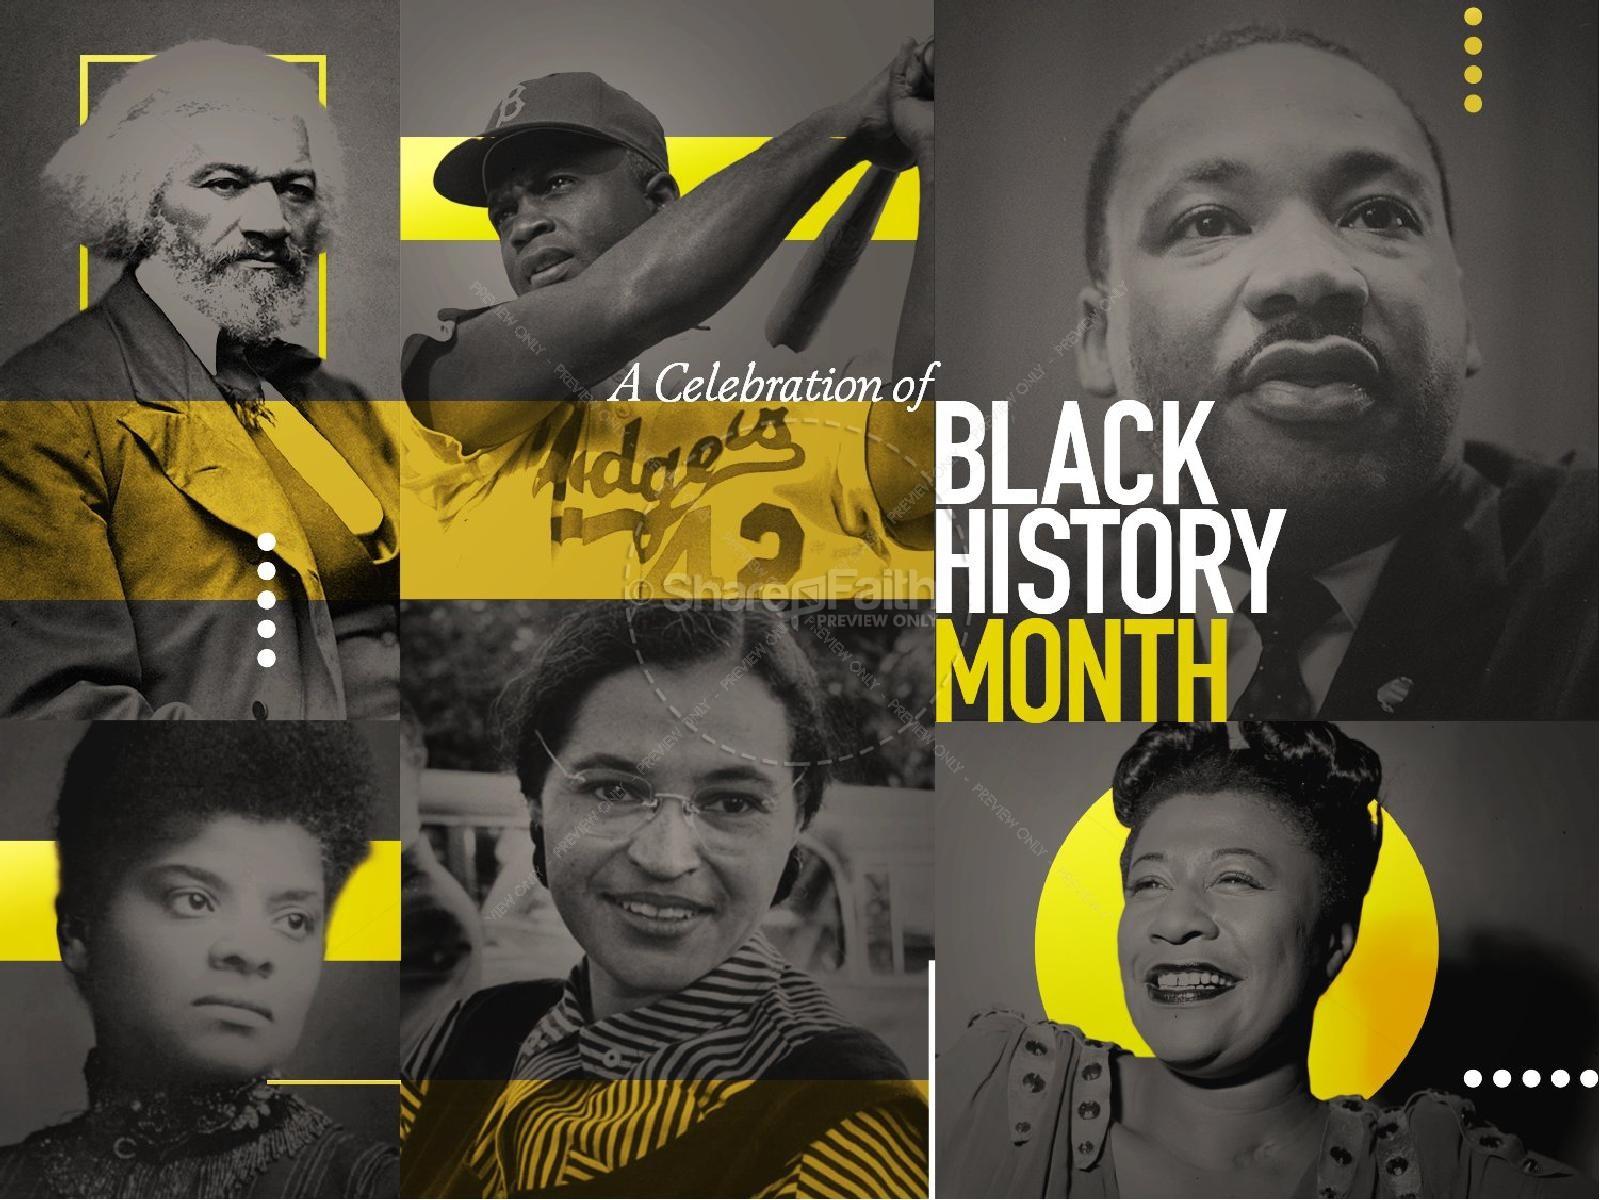 Black History Month Slides Template